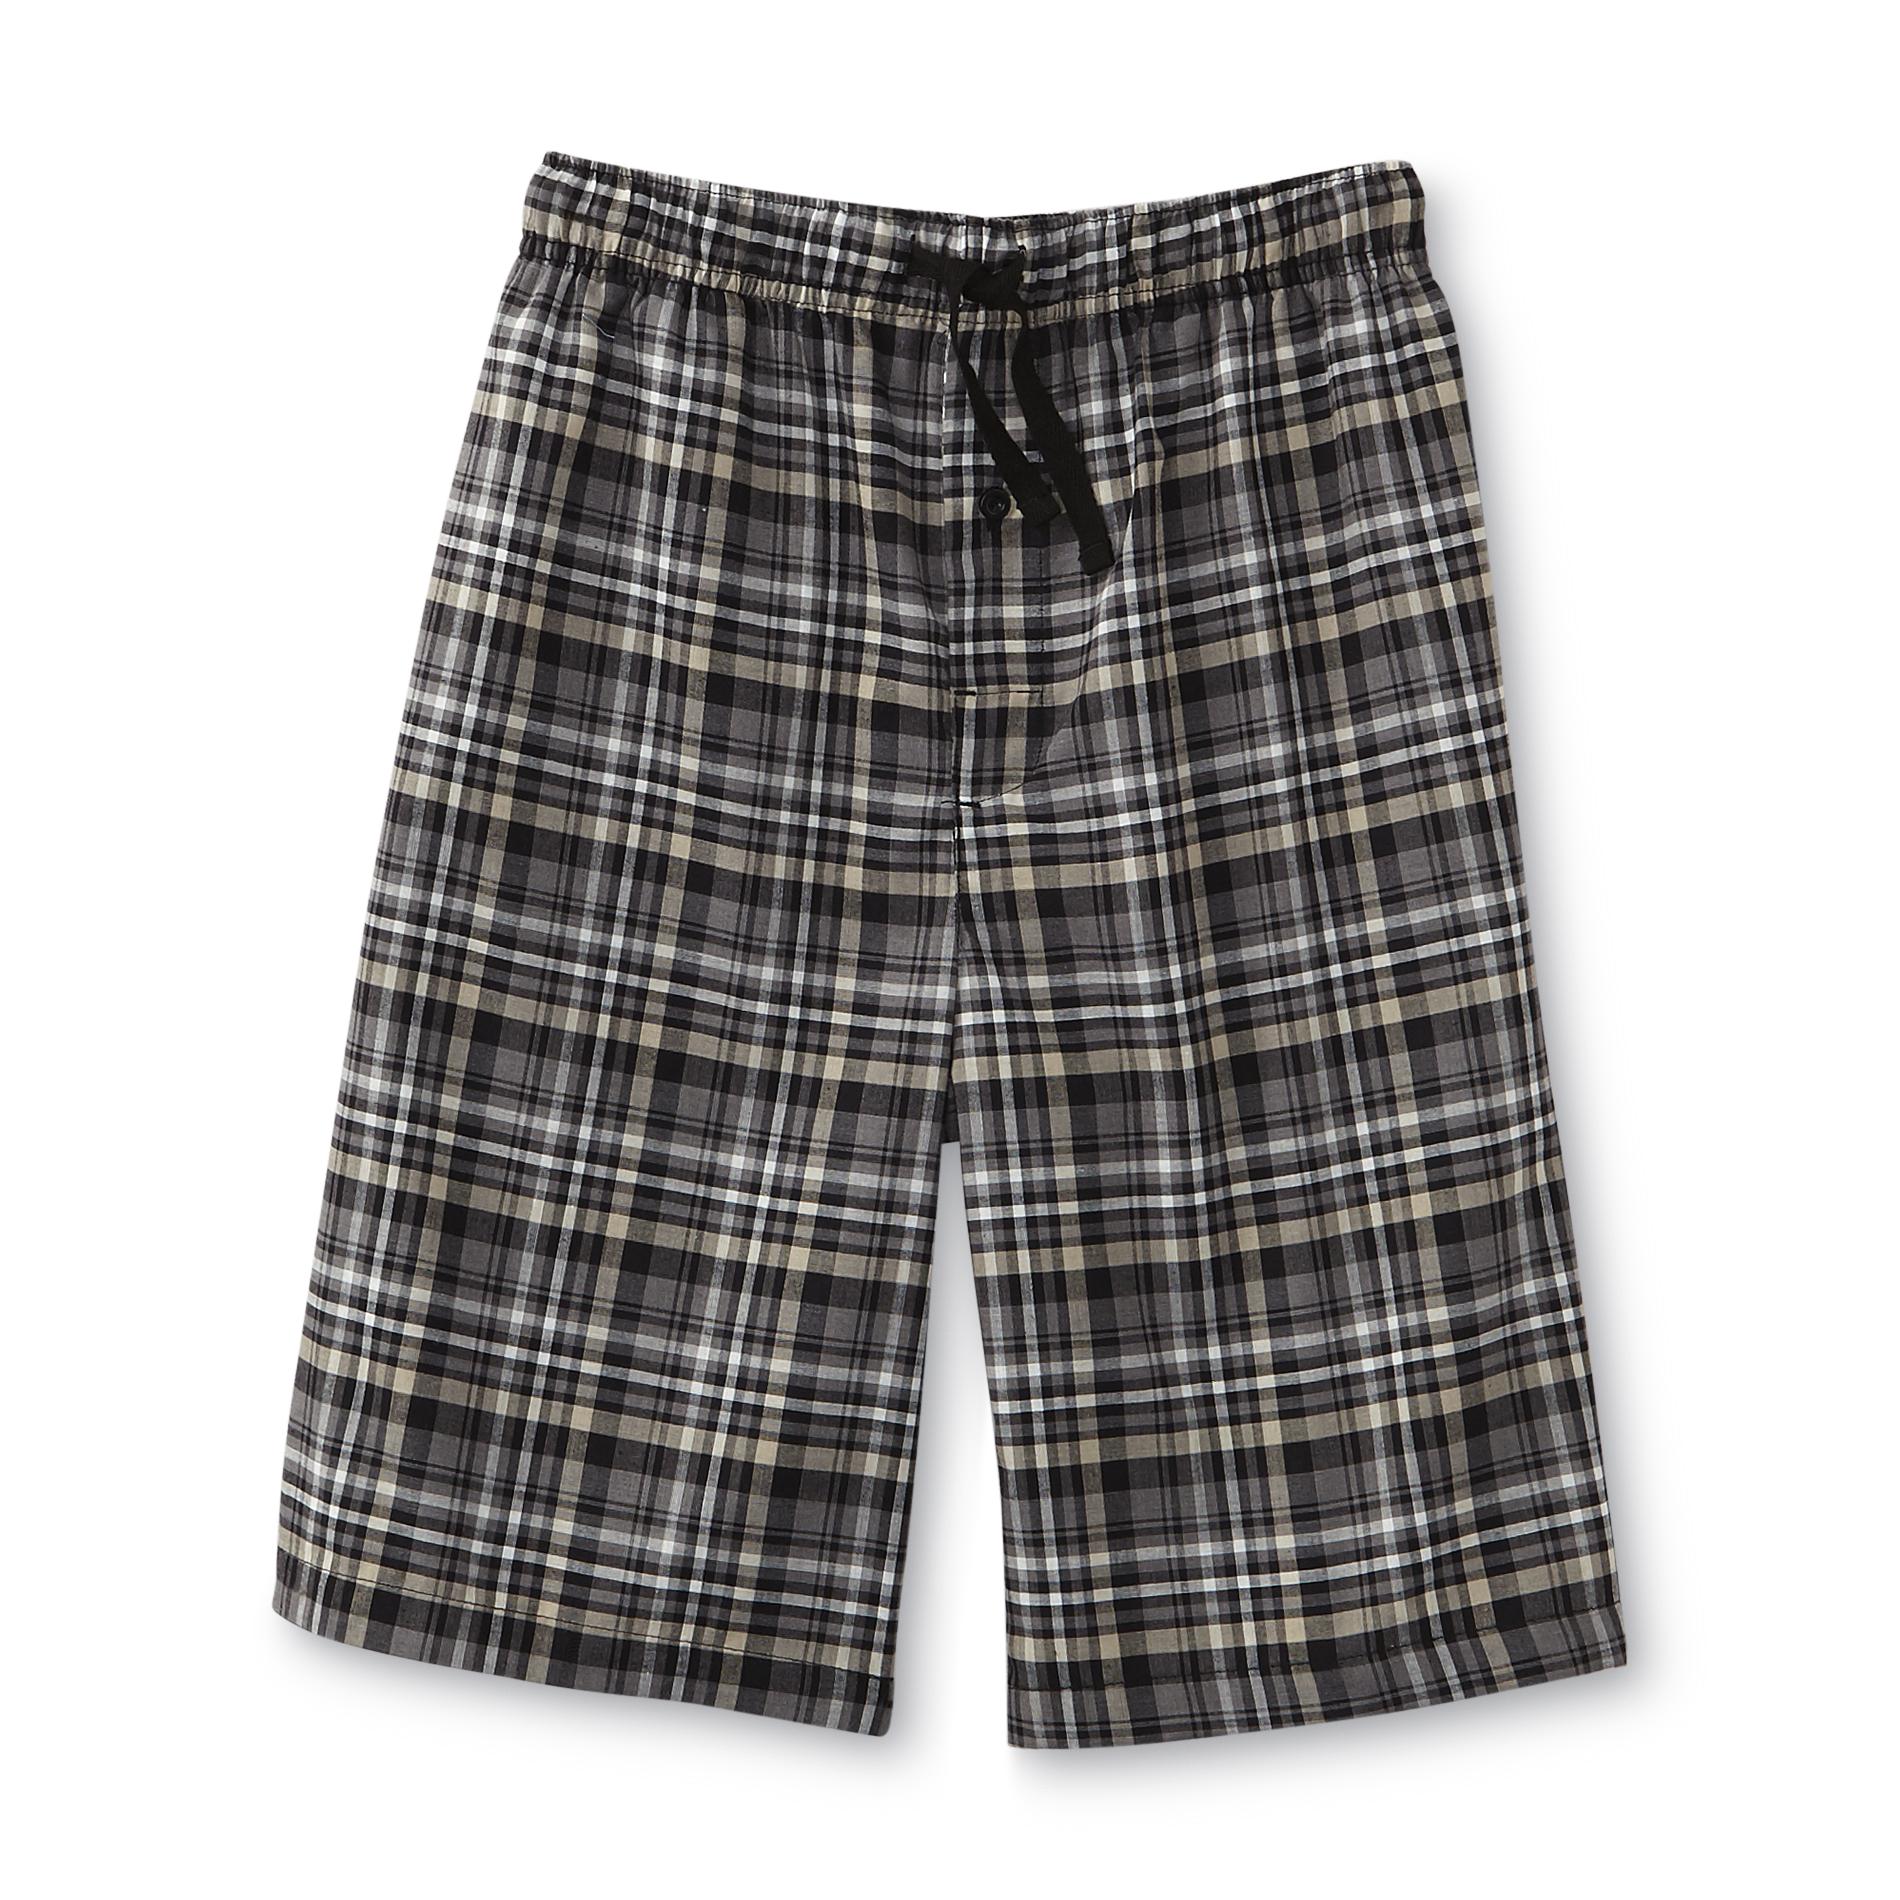 Basic Editions Men's Pajama Shorts - Plaid